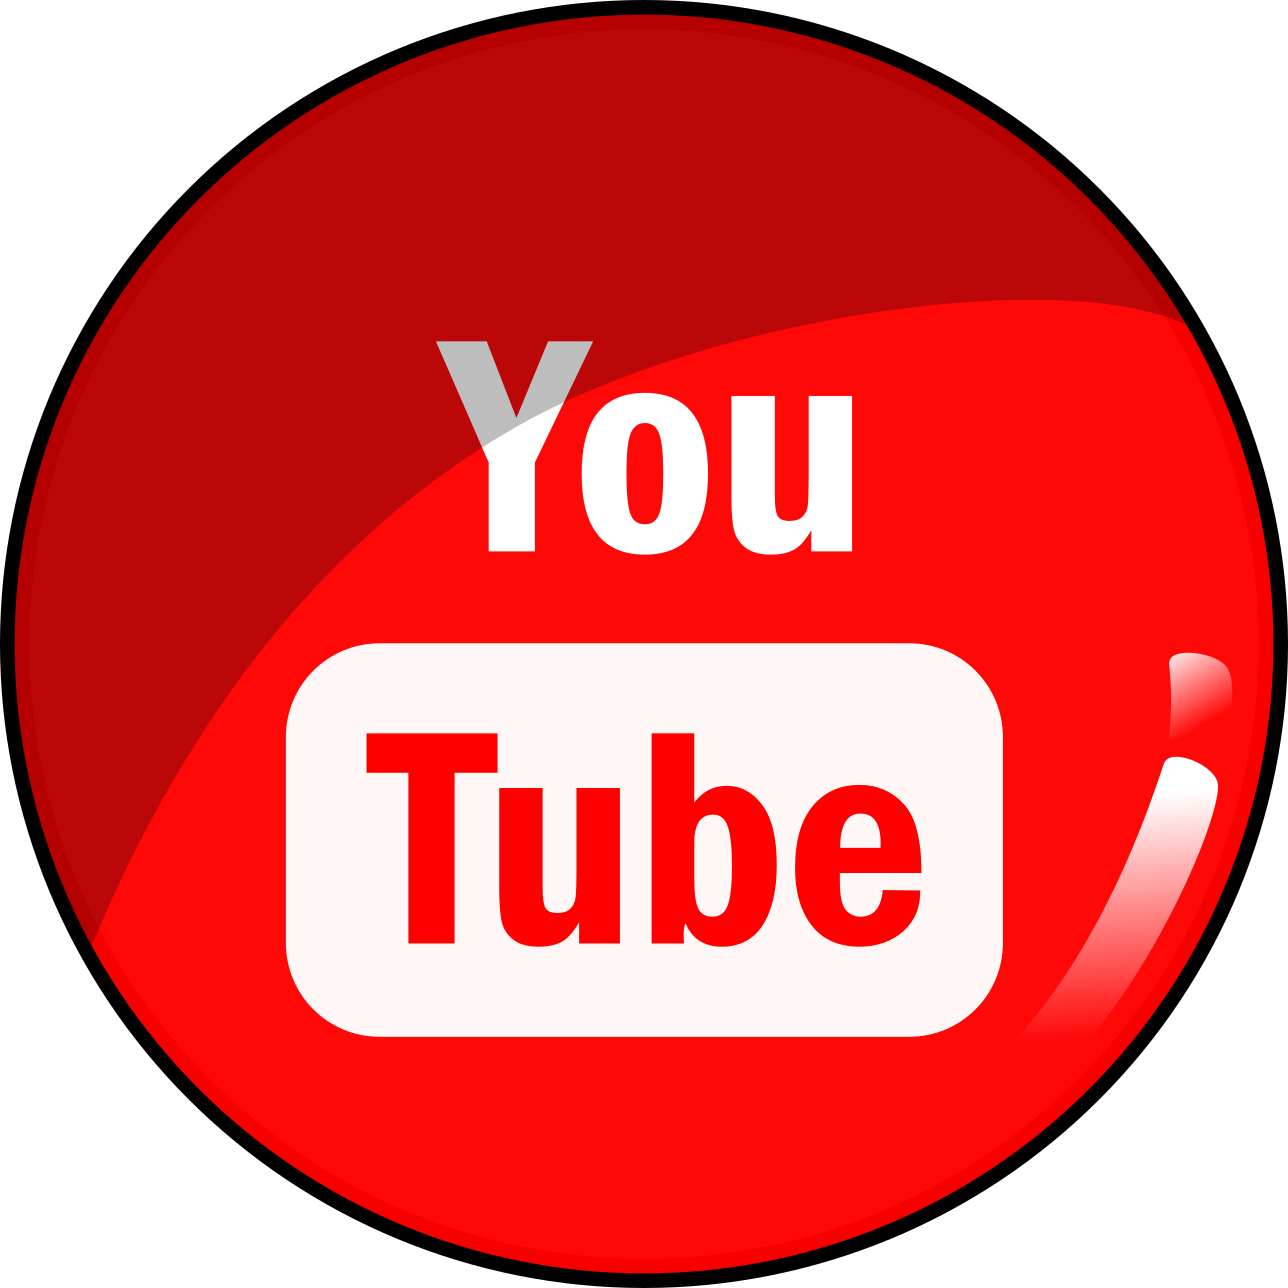 Descagar Logo Youtube Fondo Transparente, Png, Svg, - Logo You Tube Png Fondo Transparente Clipart (1288x1288), Png Download